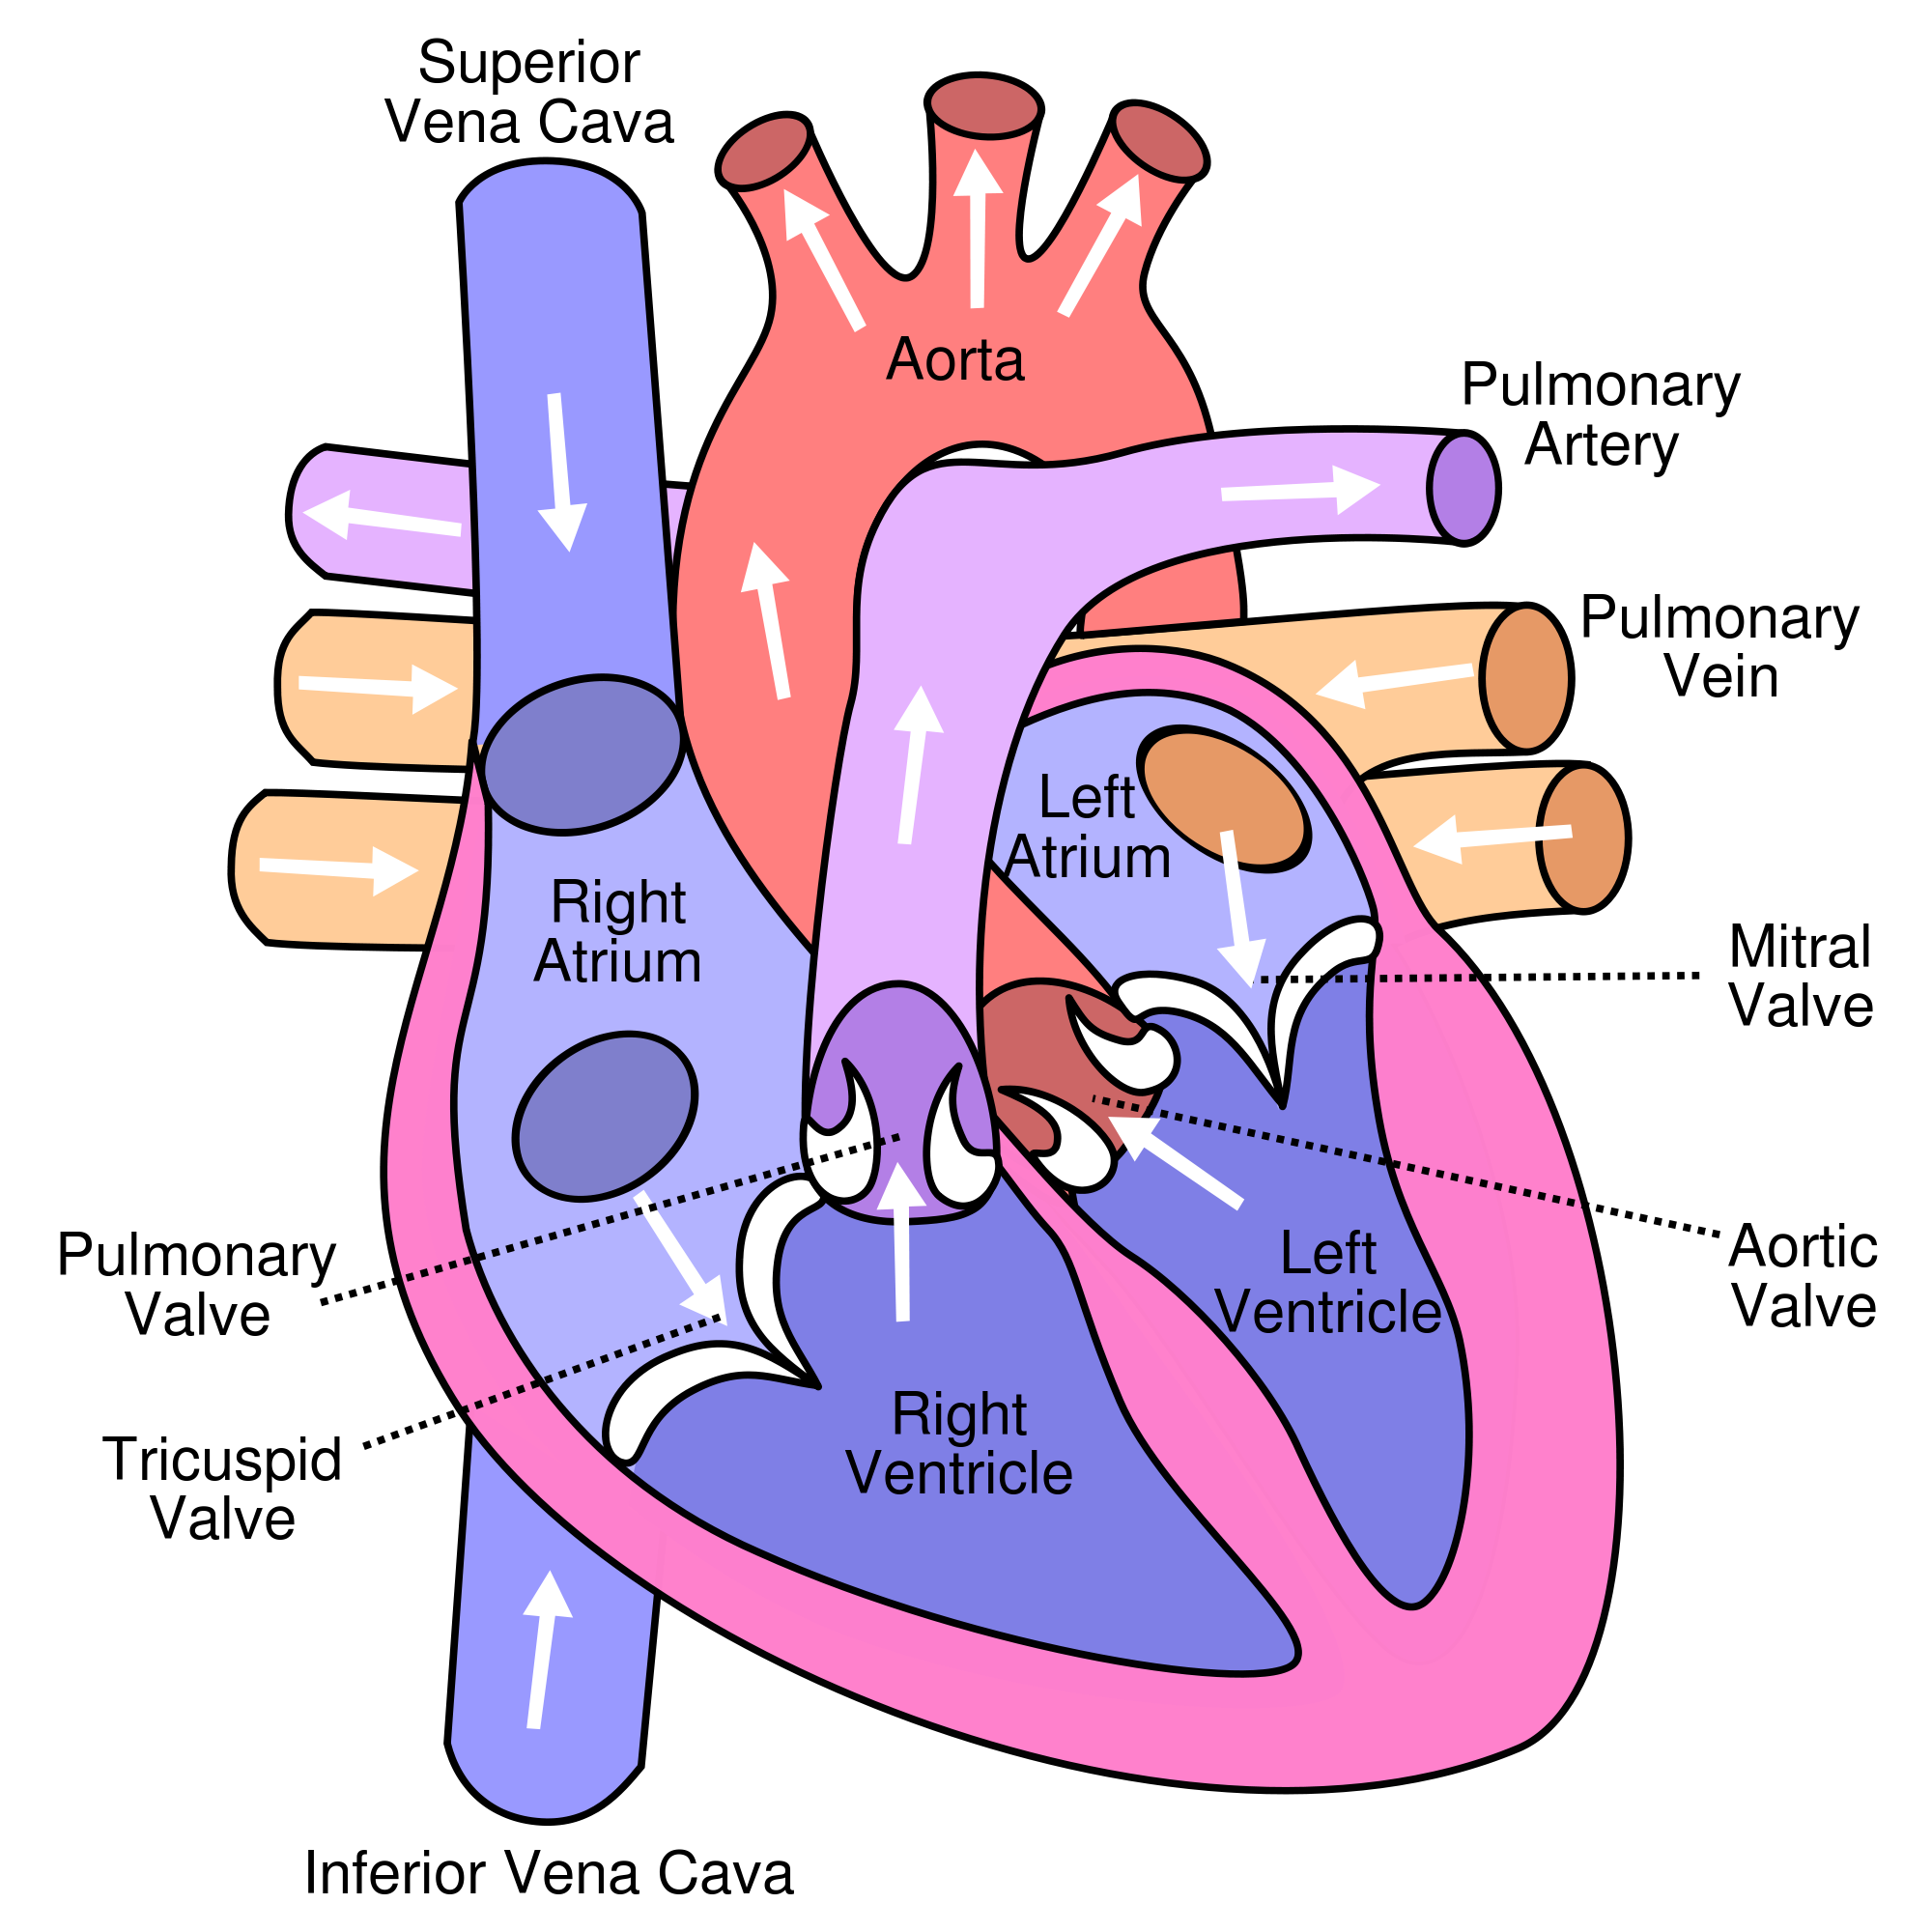 Circulatory system - Wikipedia, the free encyclopedia